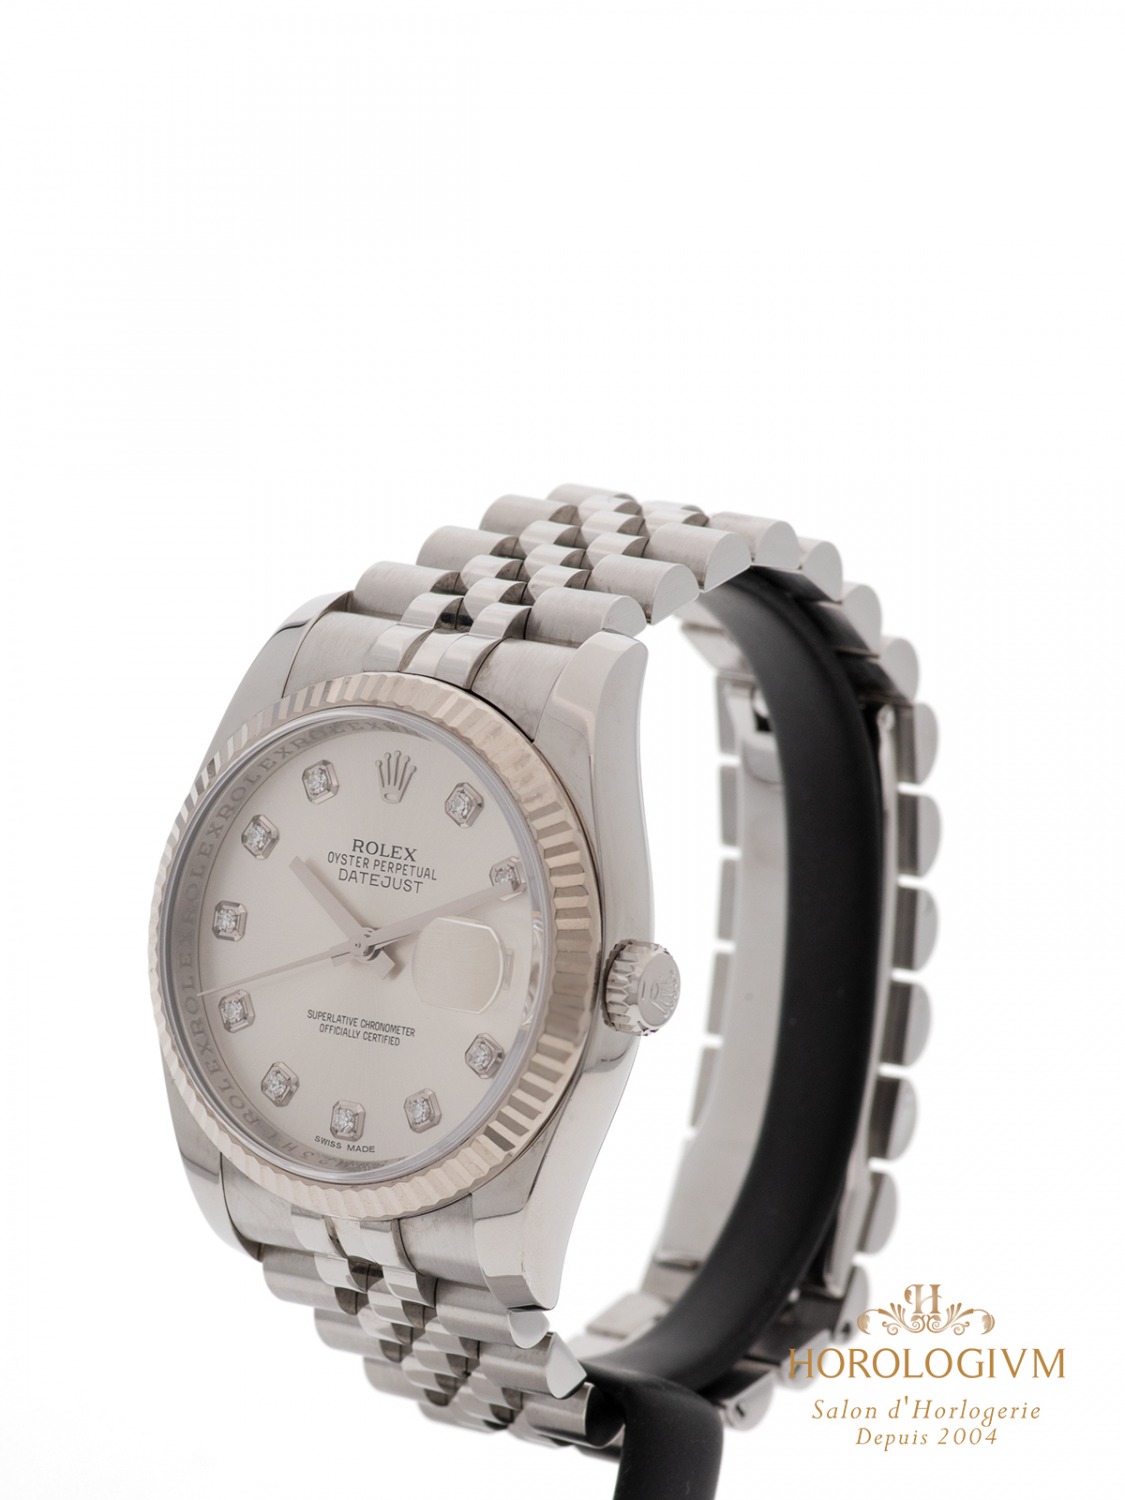 Rolex Datejust 36MM with diamonds Ref 116234 watch, silver